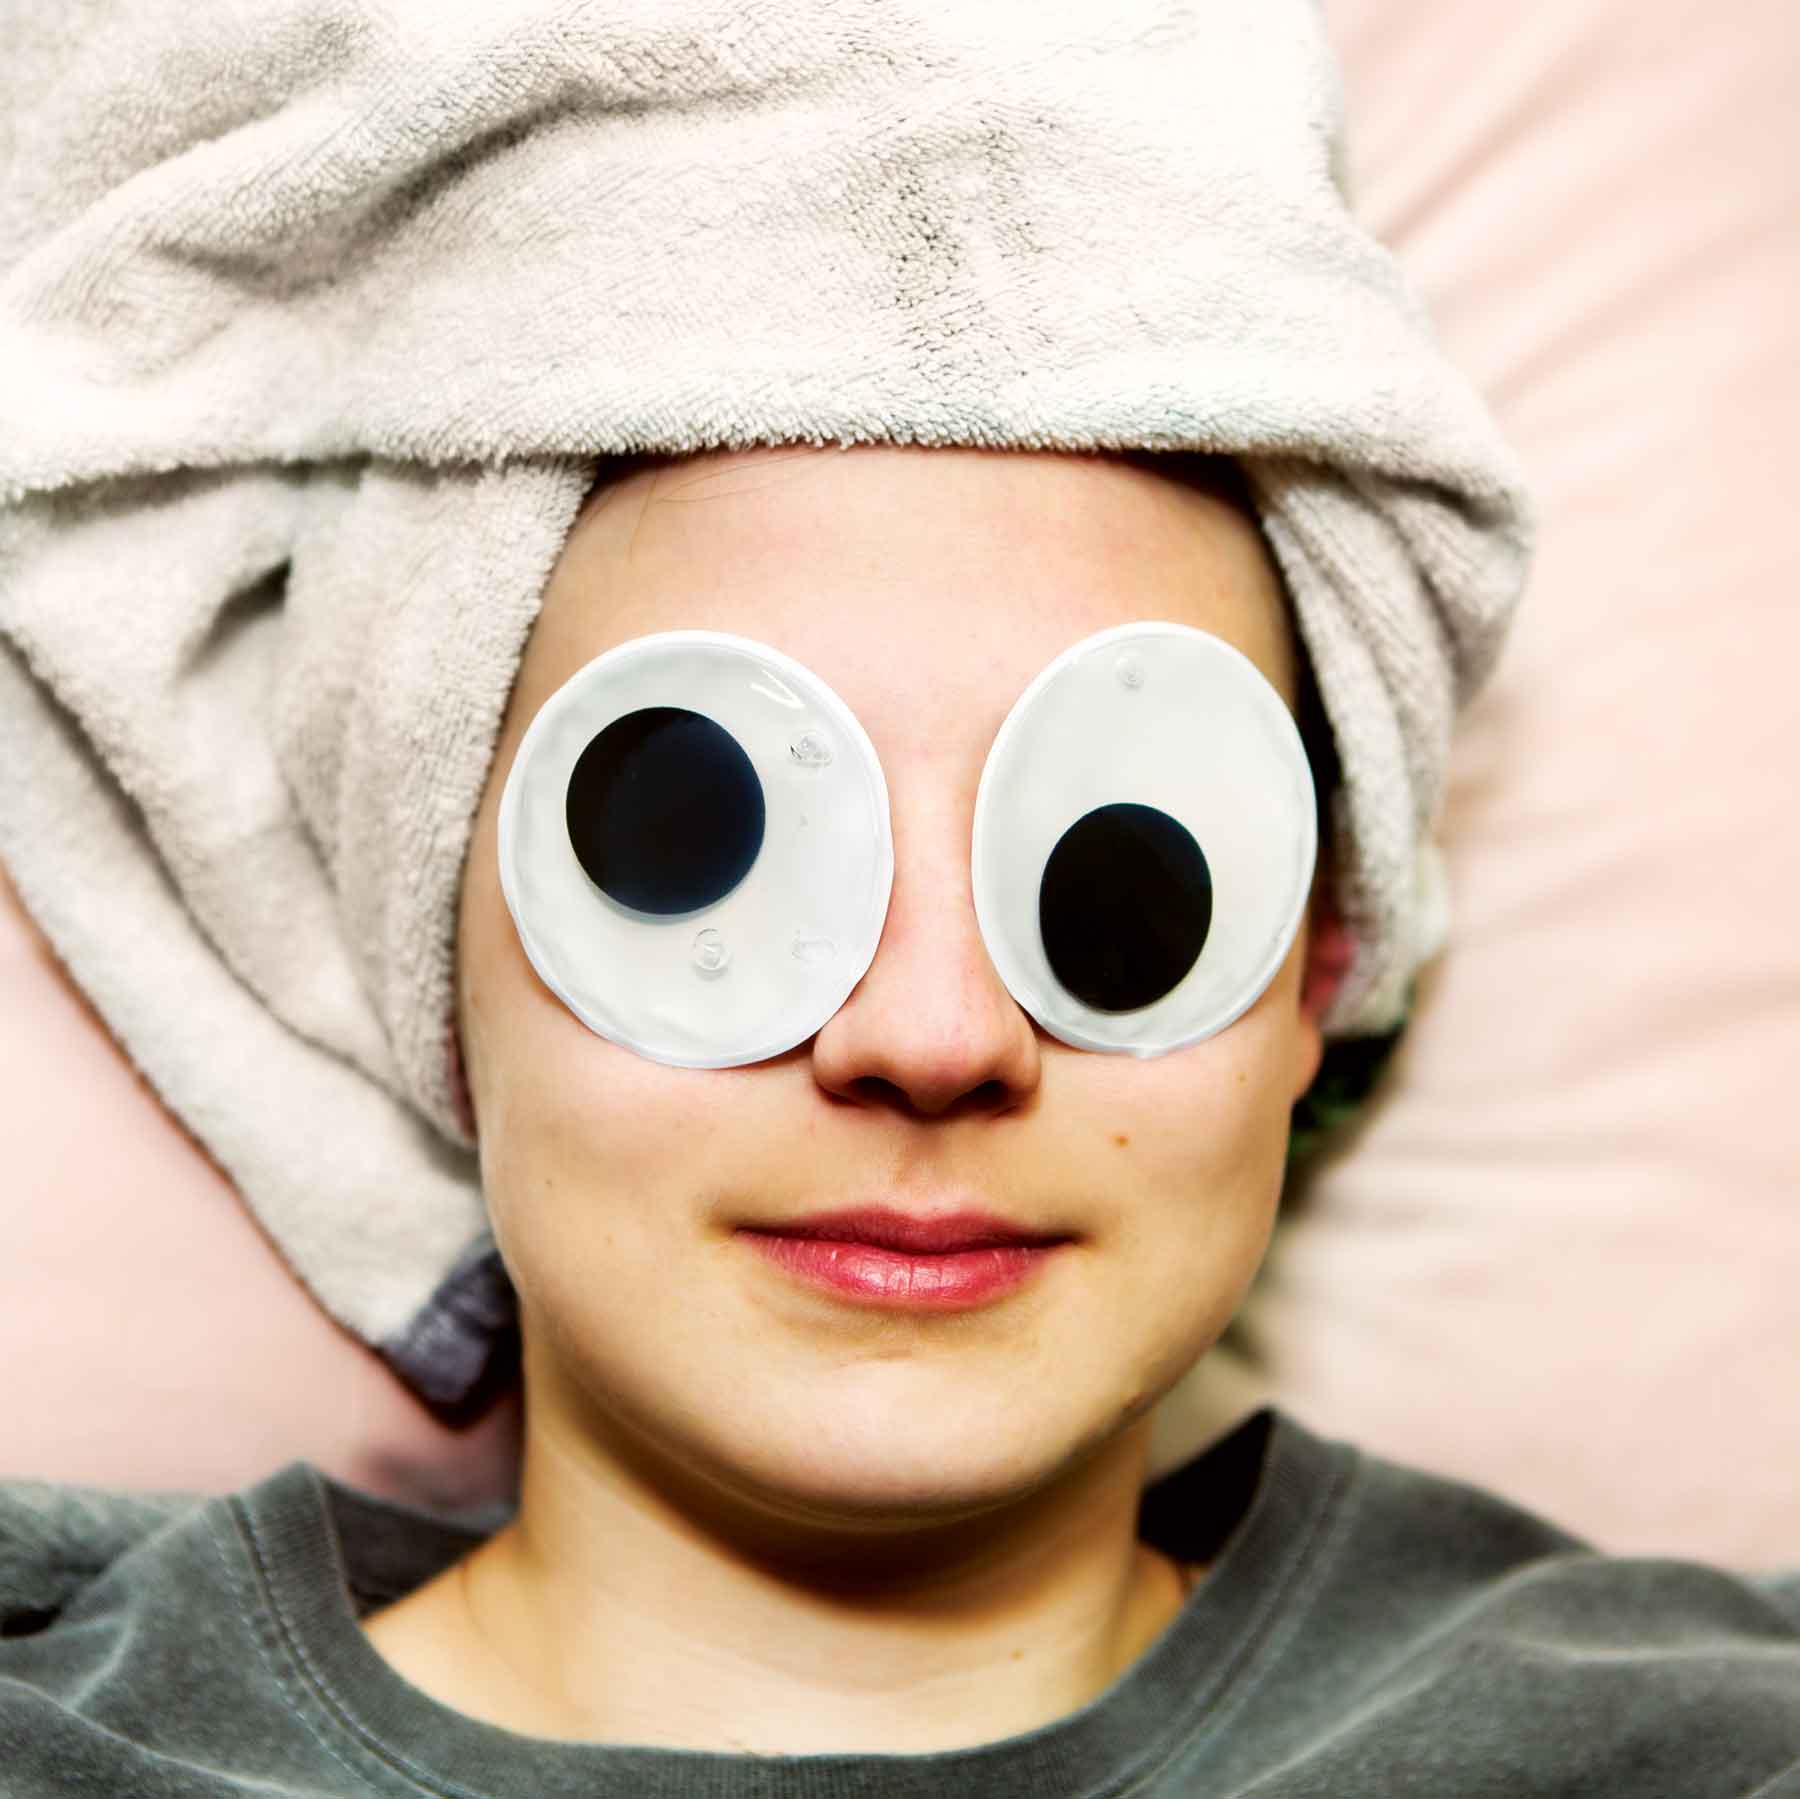 Googly Eye Mask: Gel eye pads that look like googly eyes!